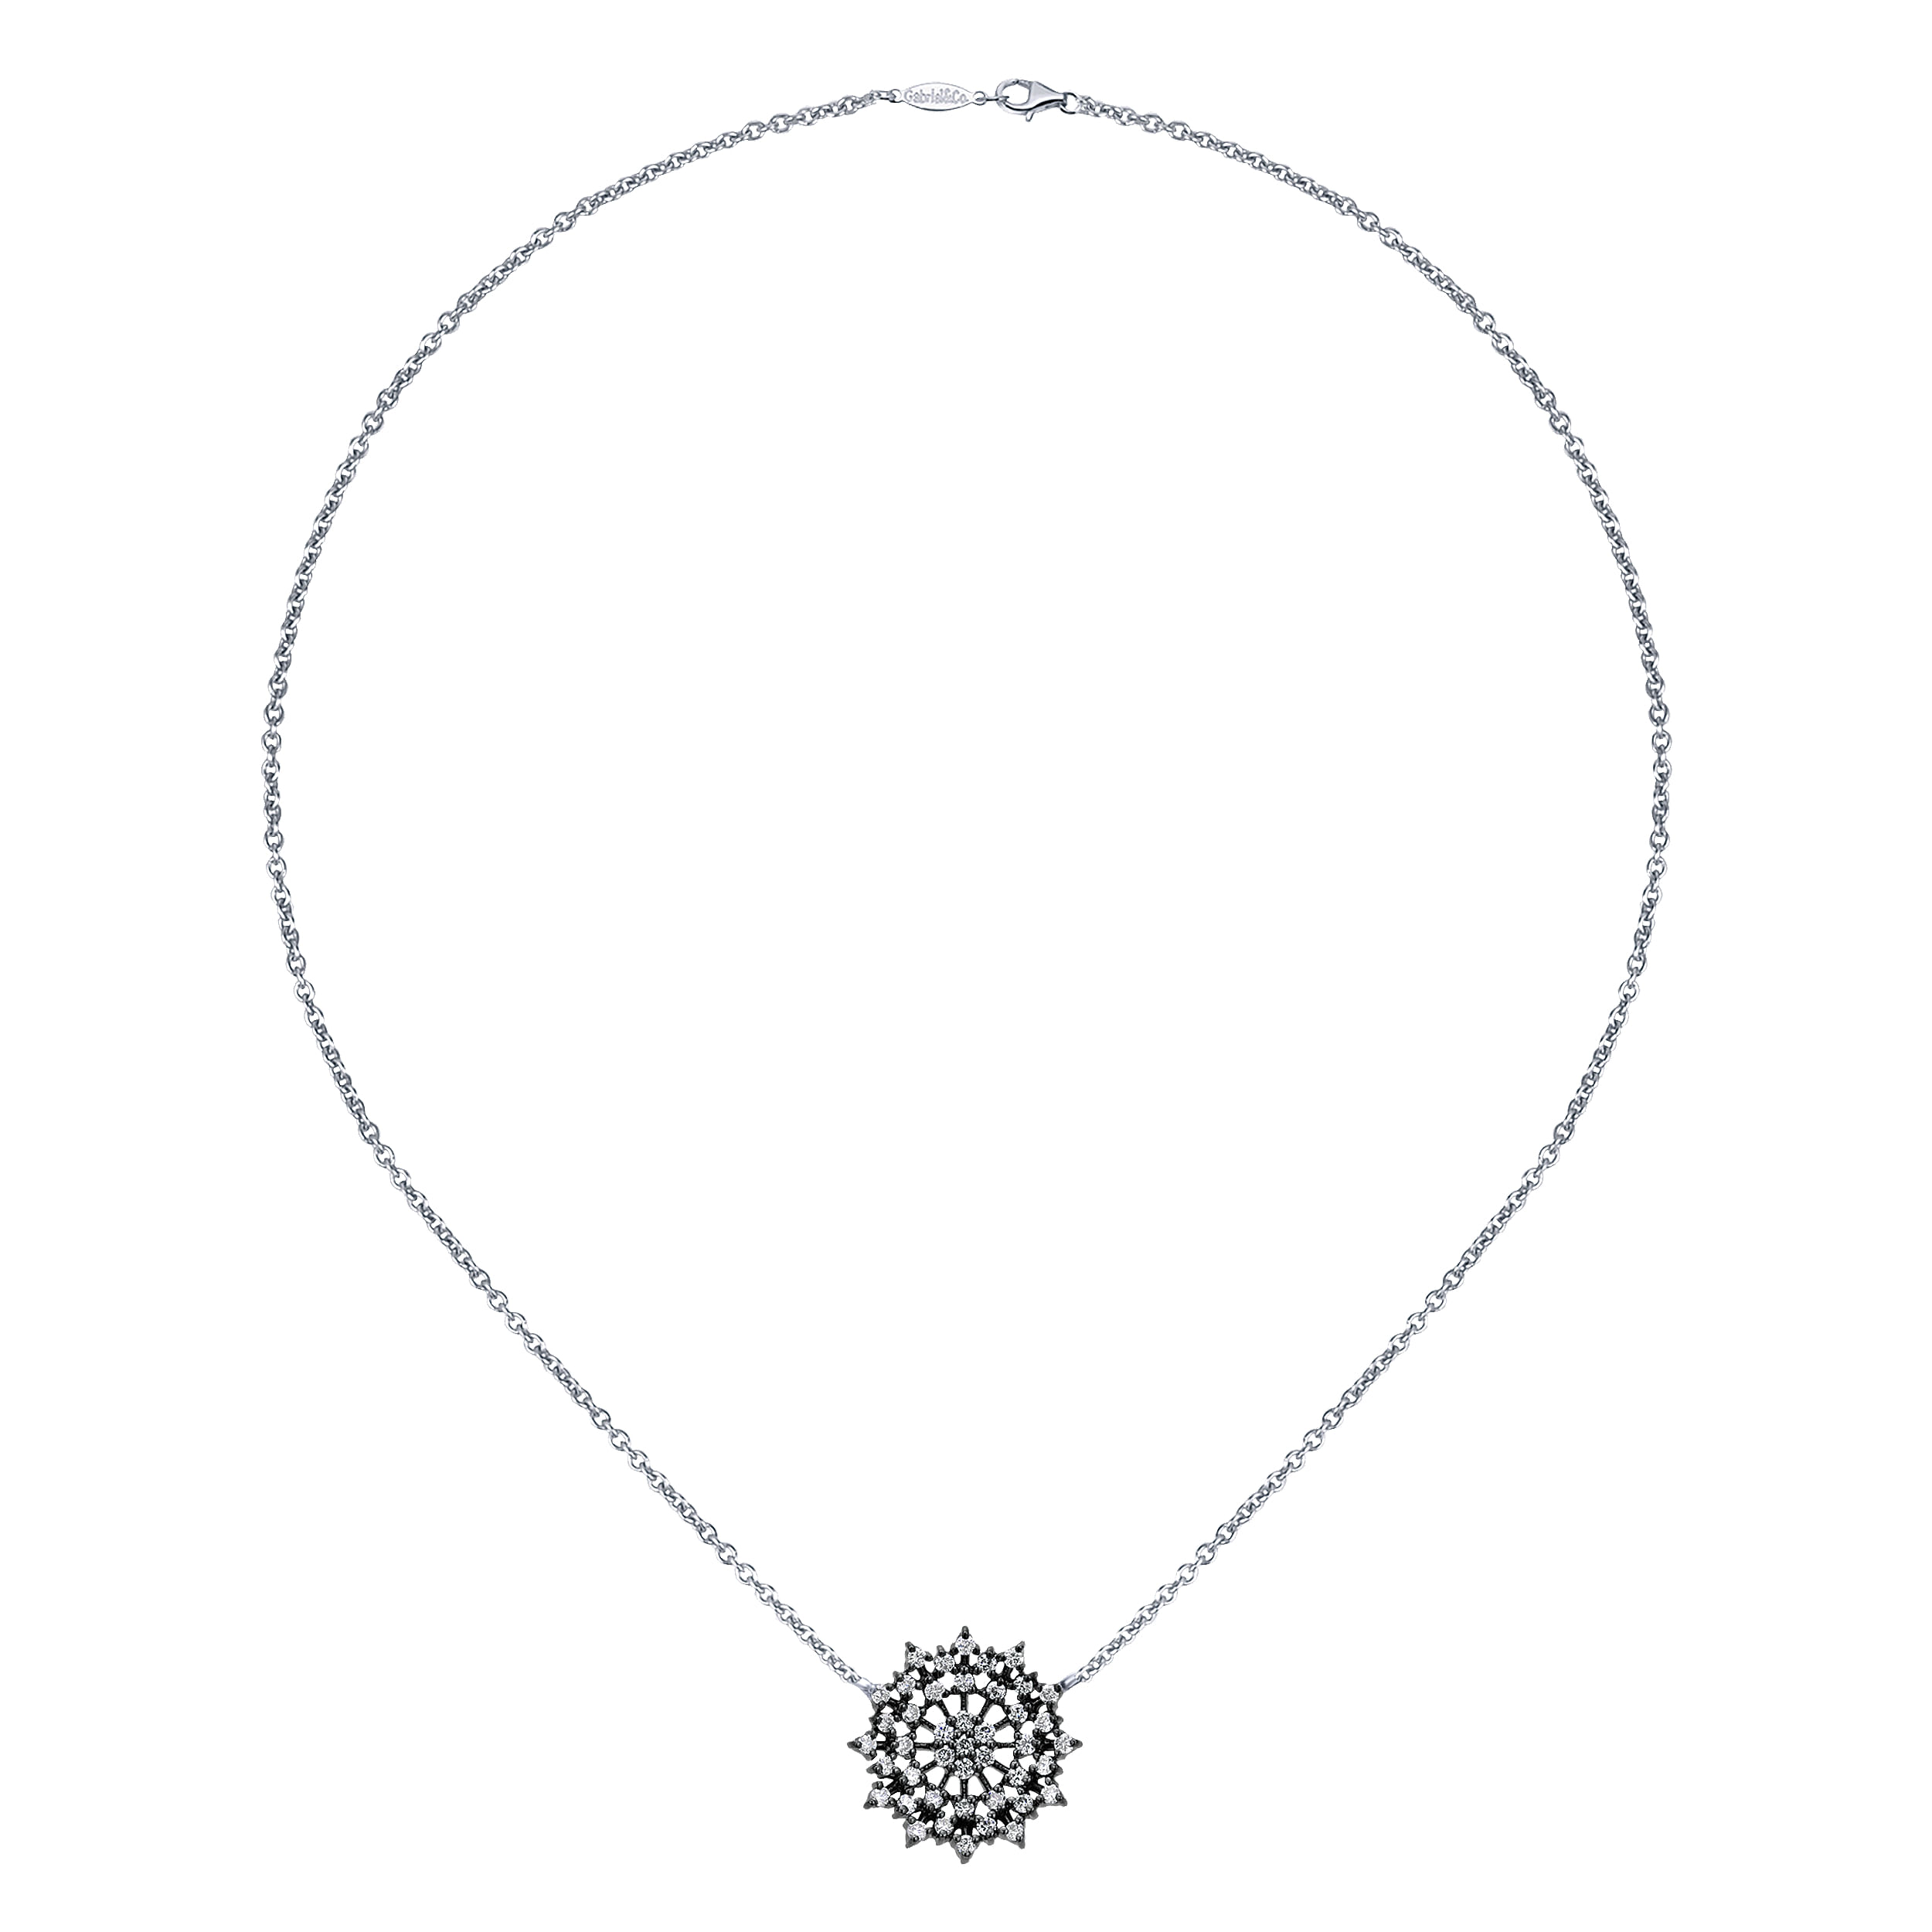 18 inch 14K White Gold Fashion Necklace